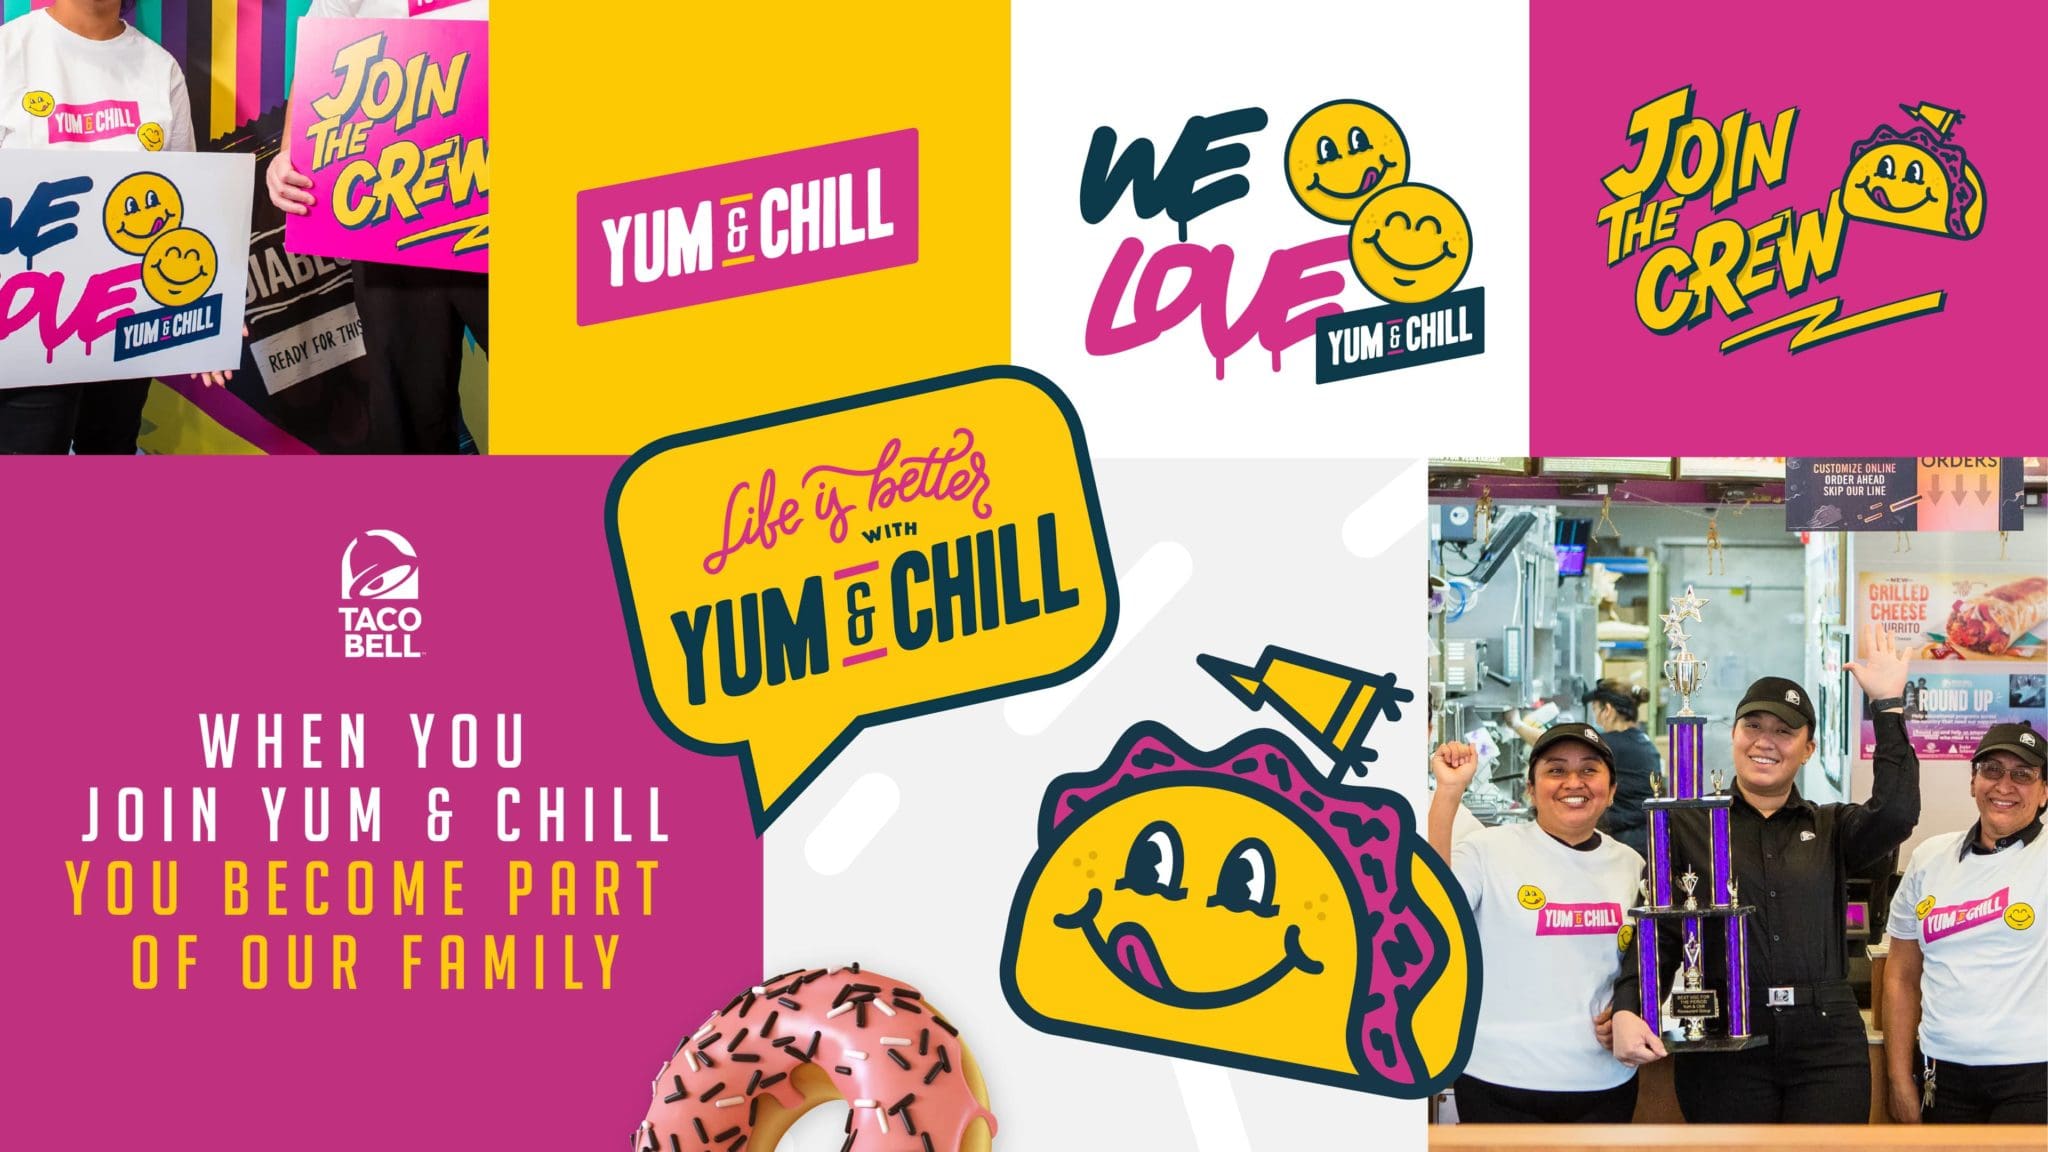 Yum & Chill website banner design by Bluestone98